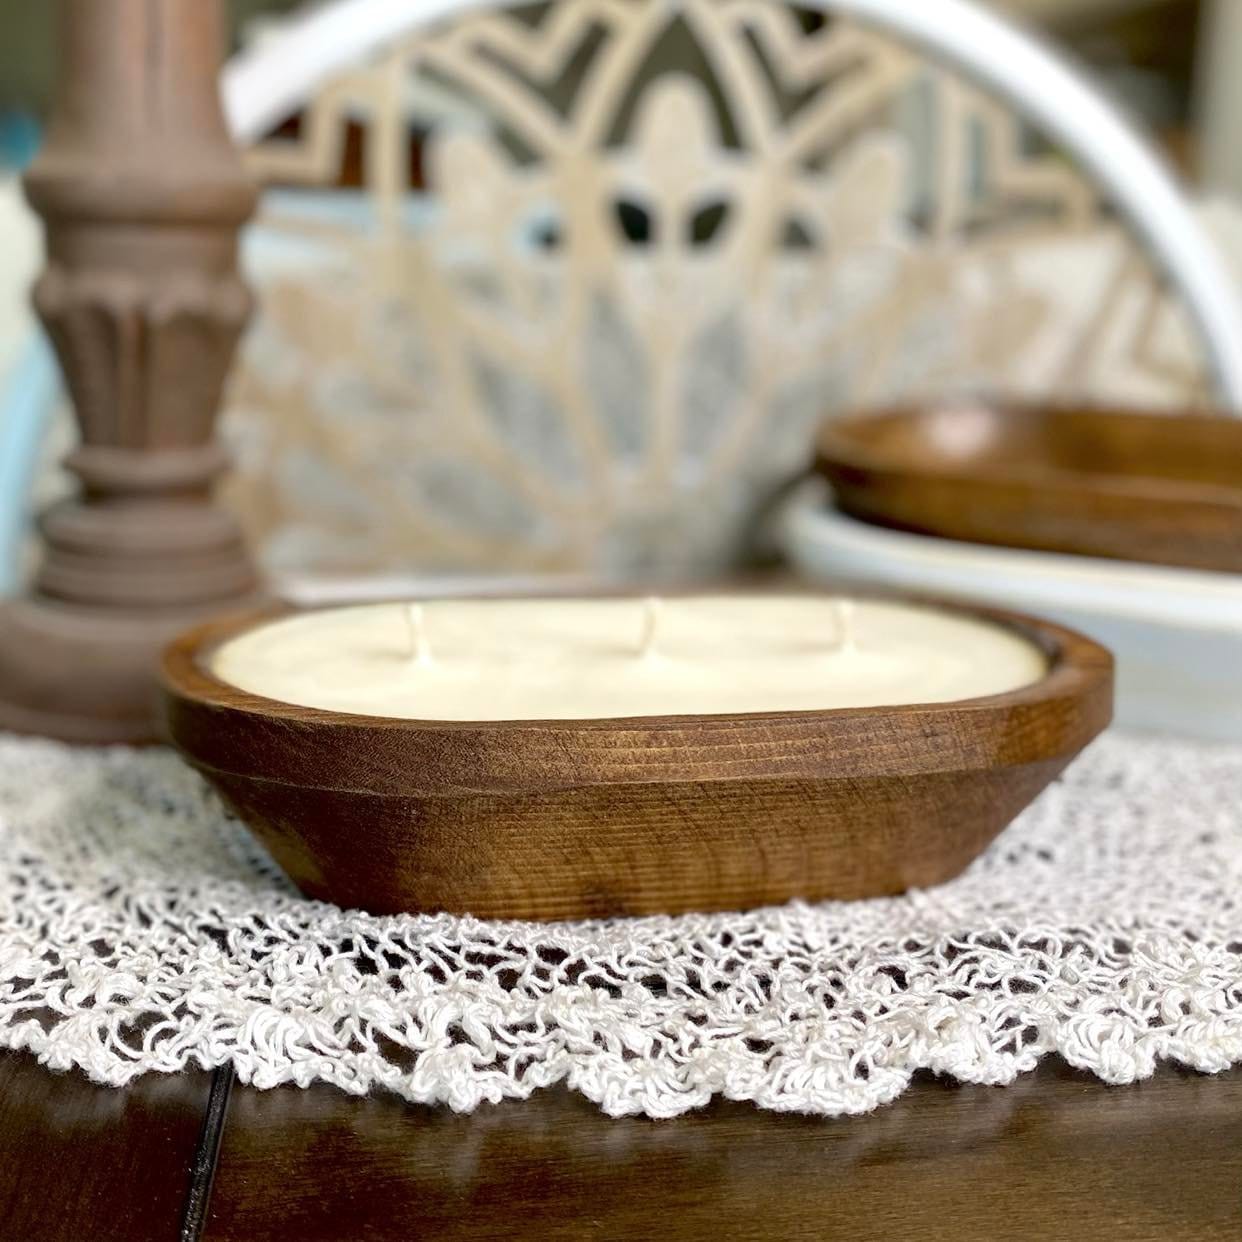 DIY Wooden Dough Bowl Candle Refill Kits